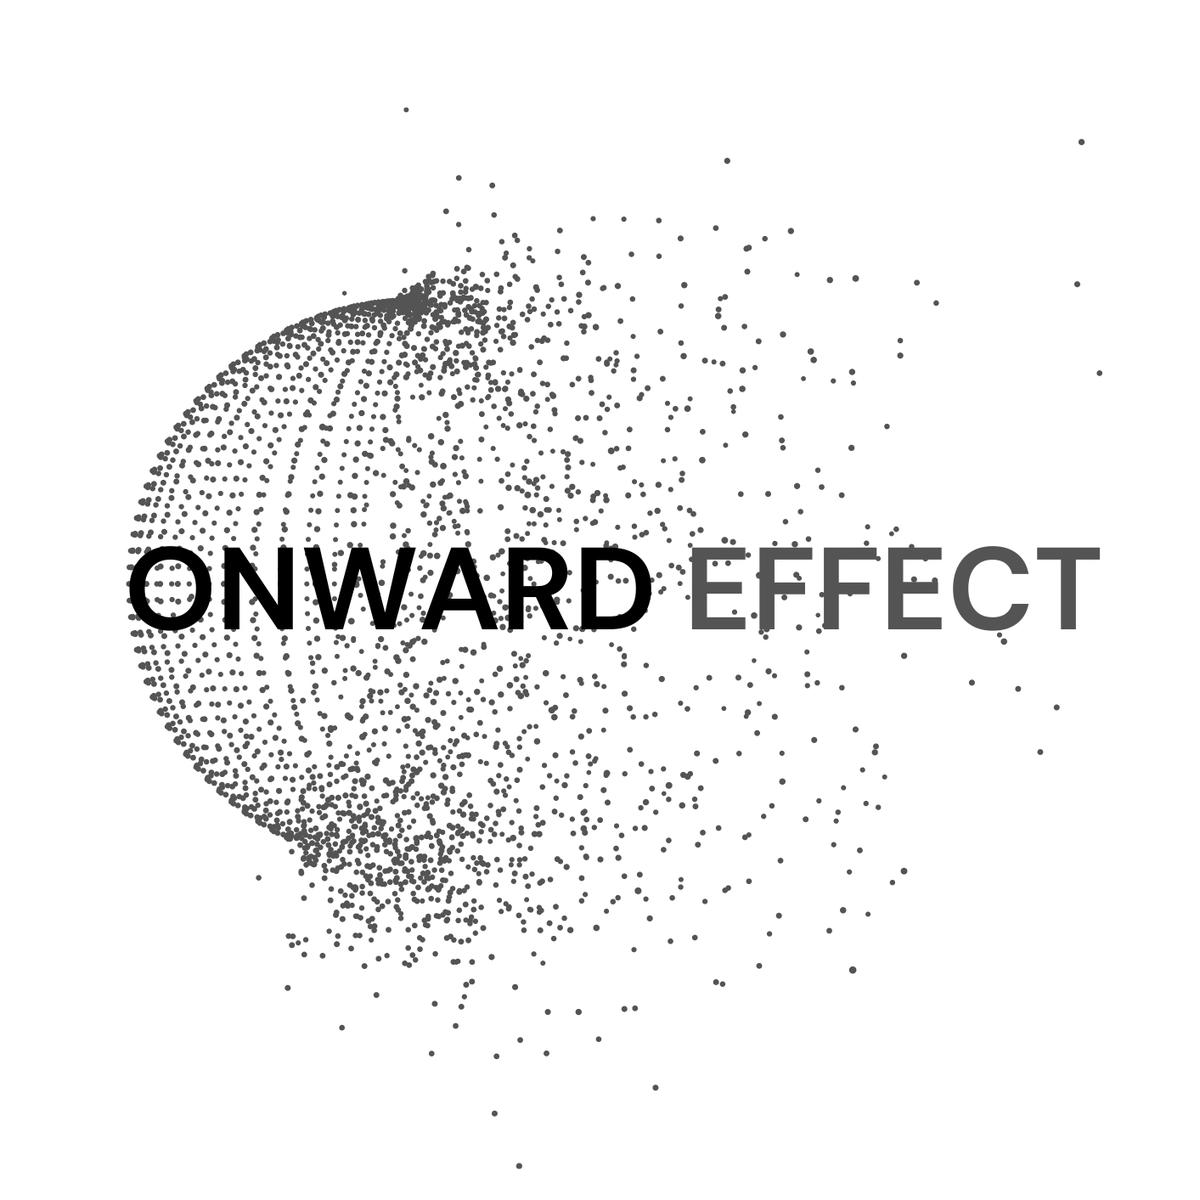 Onward Effect's images